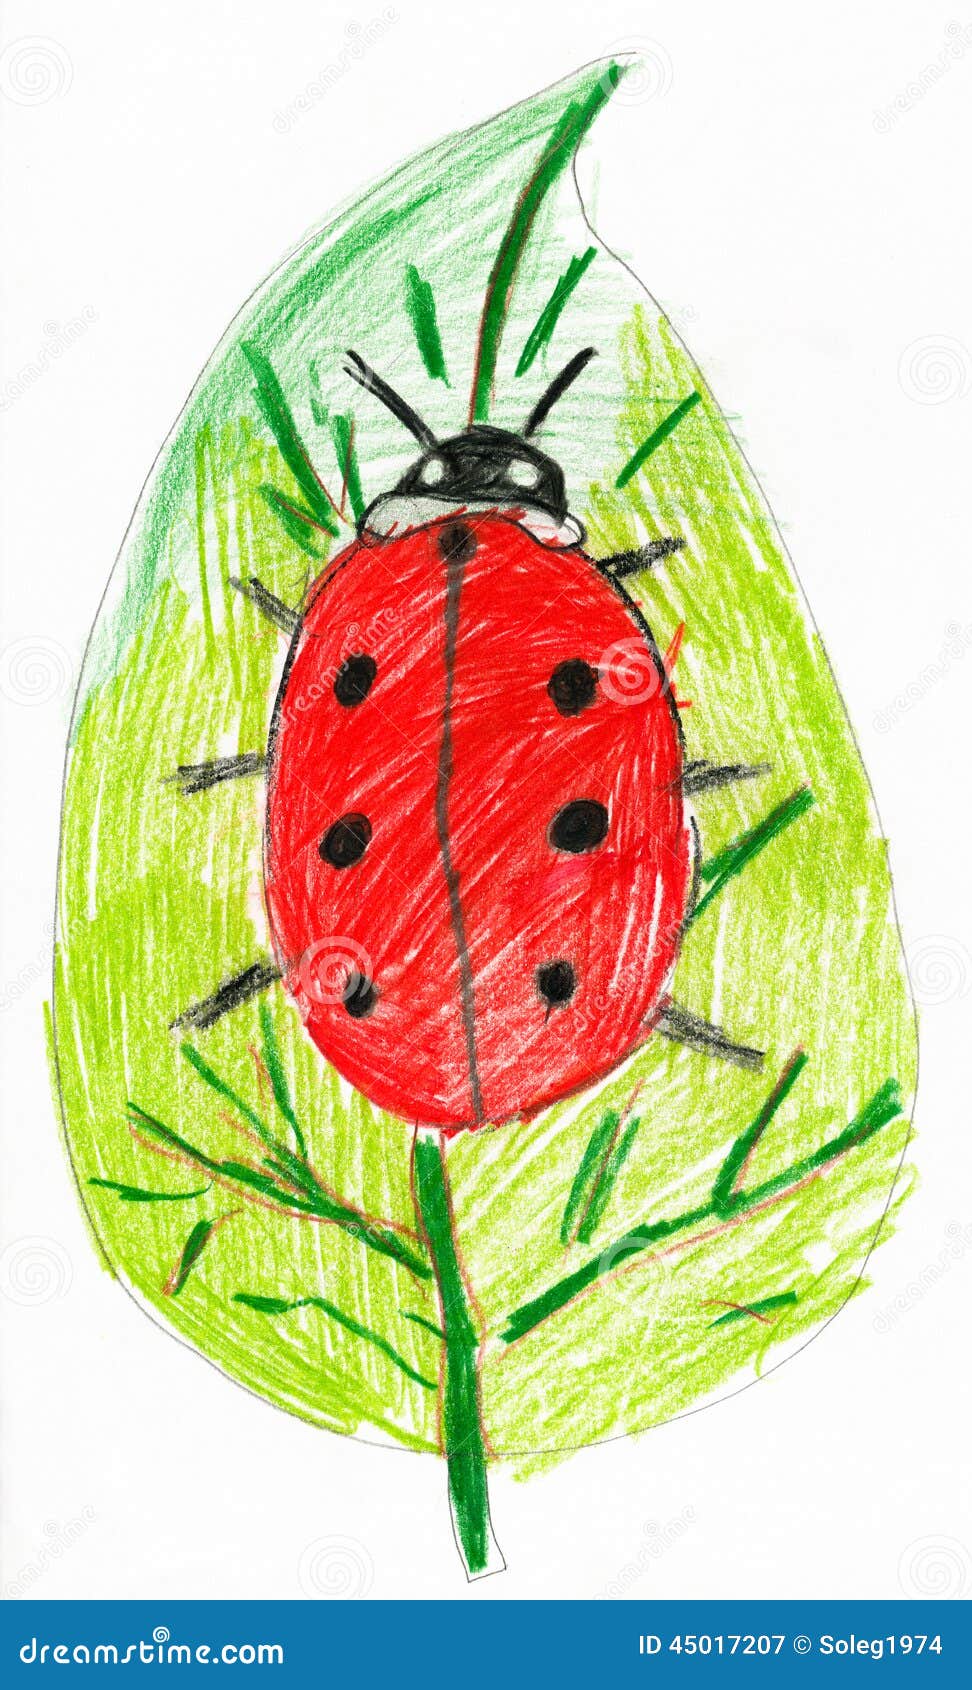 How to draw a cute ladybug - ladybird - YouTube